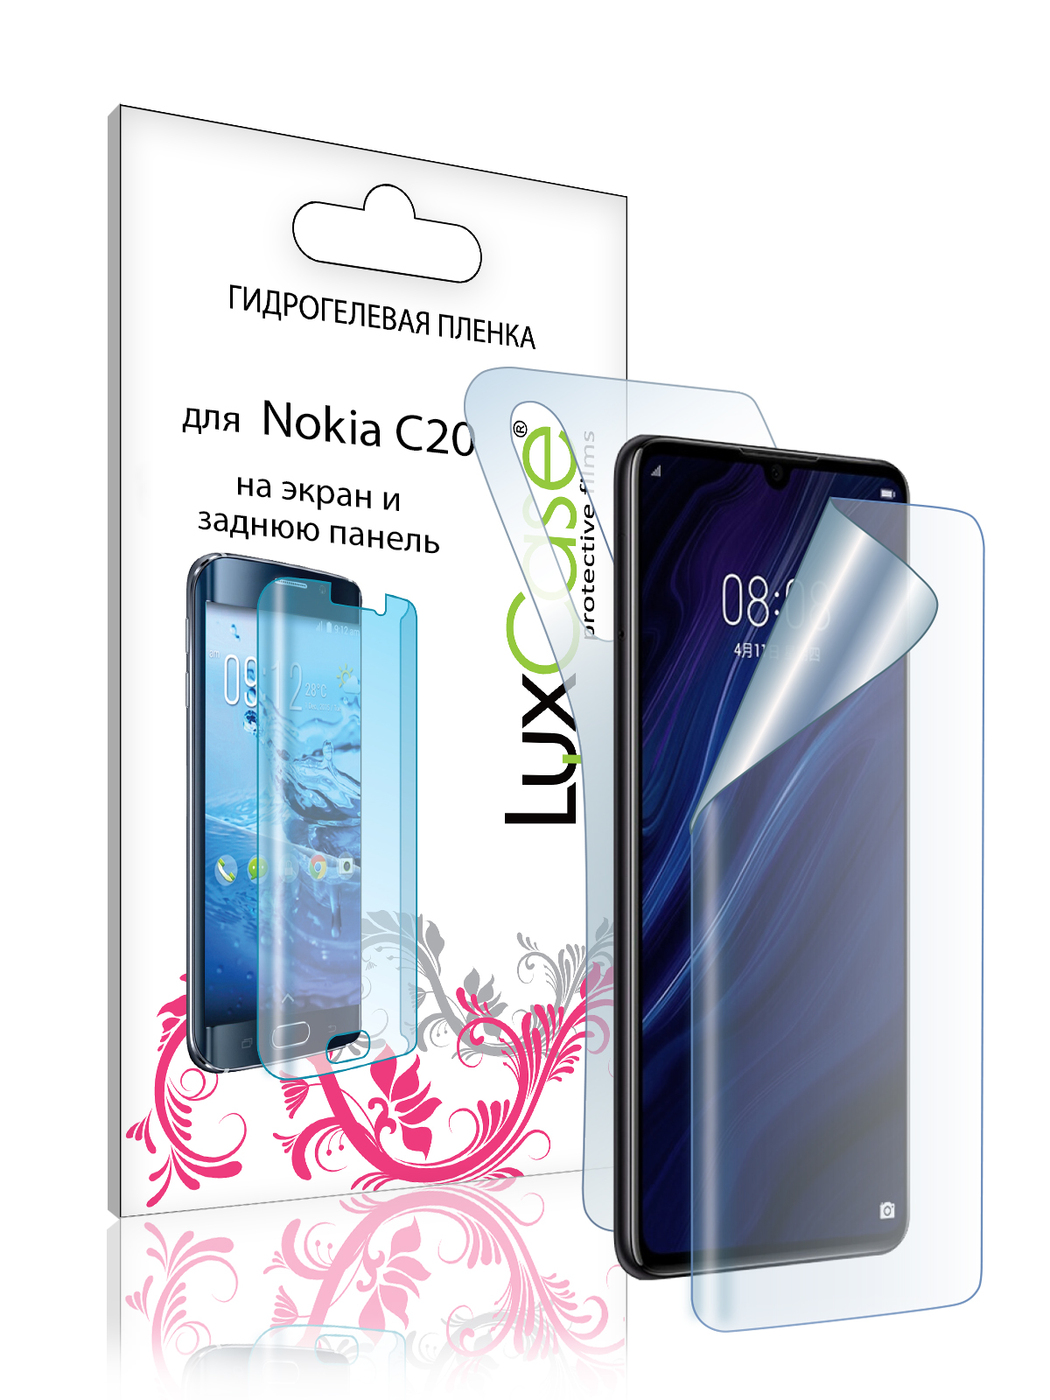 Пленка гидрогелевая LuxCase для Nokia C20 Front and Back Transparent 86388 гидрогелевая пленка luxcase для nokia g20 front transparent 86392